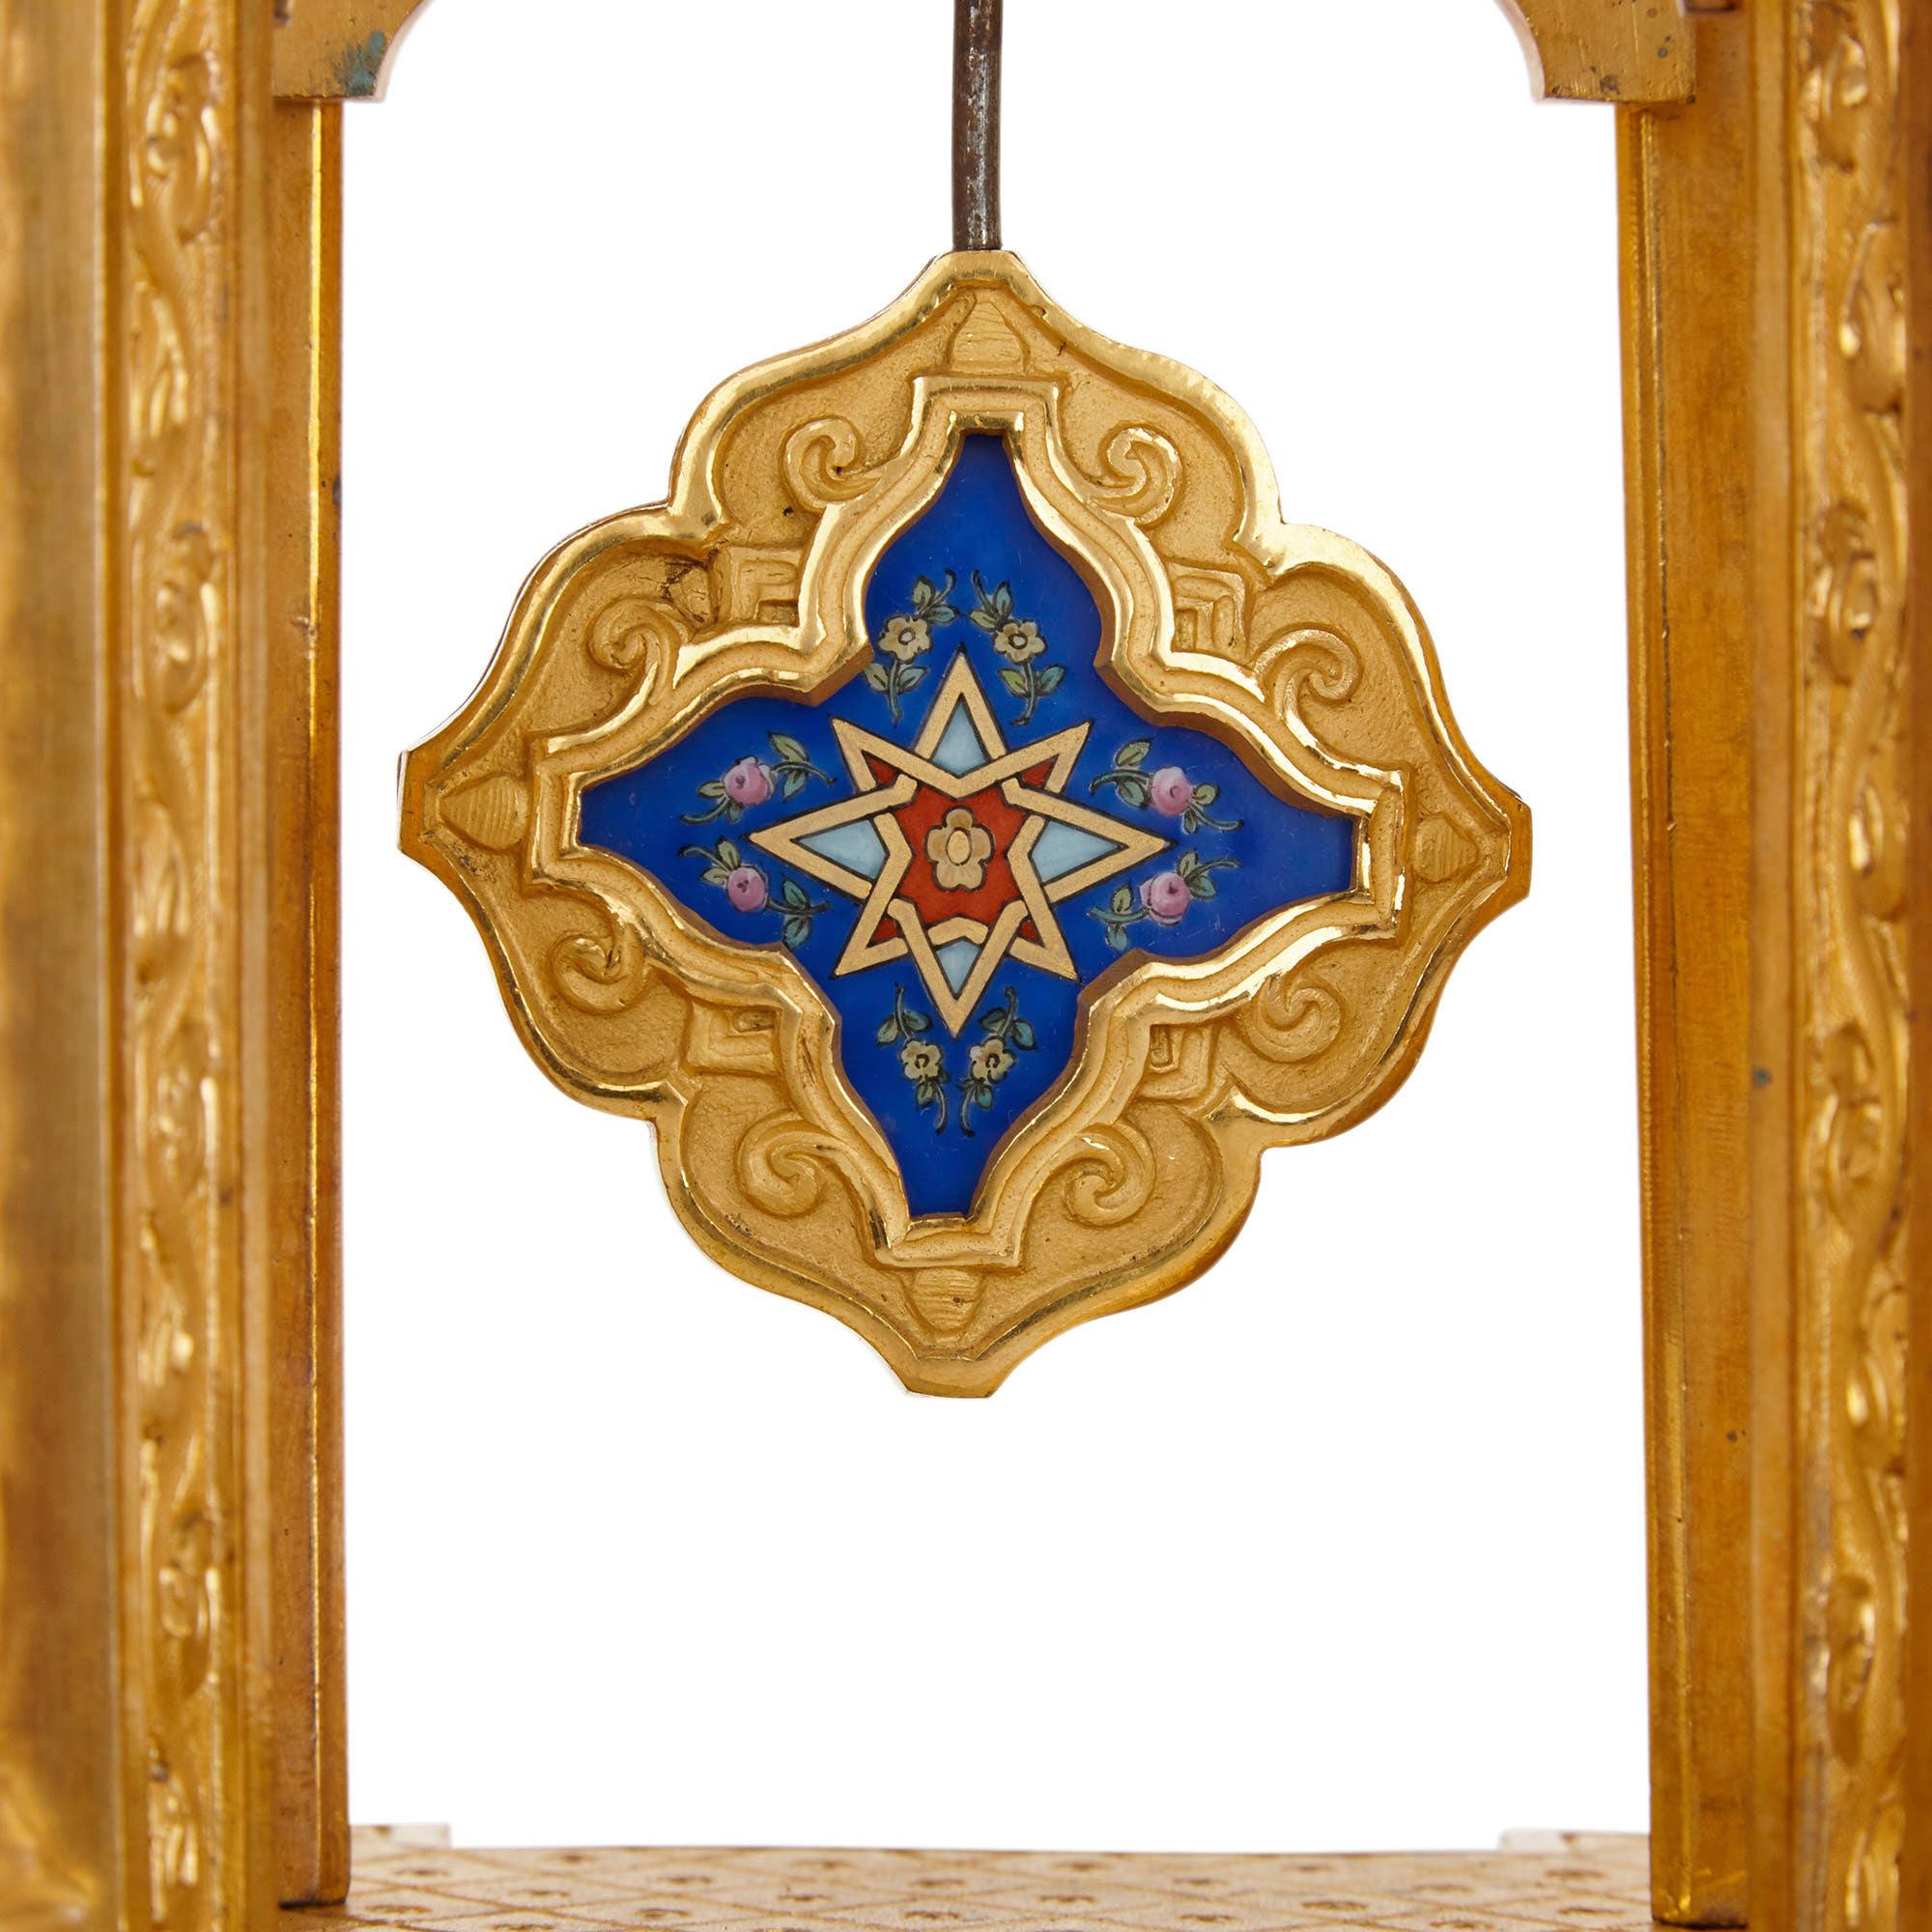 Gilt Belle Époque Period Ormolu and Porcelain Mantel Clock in Moorish Style For Sale